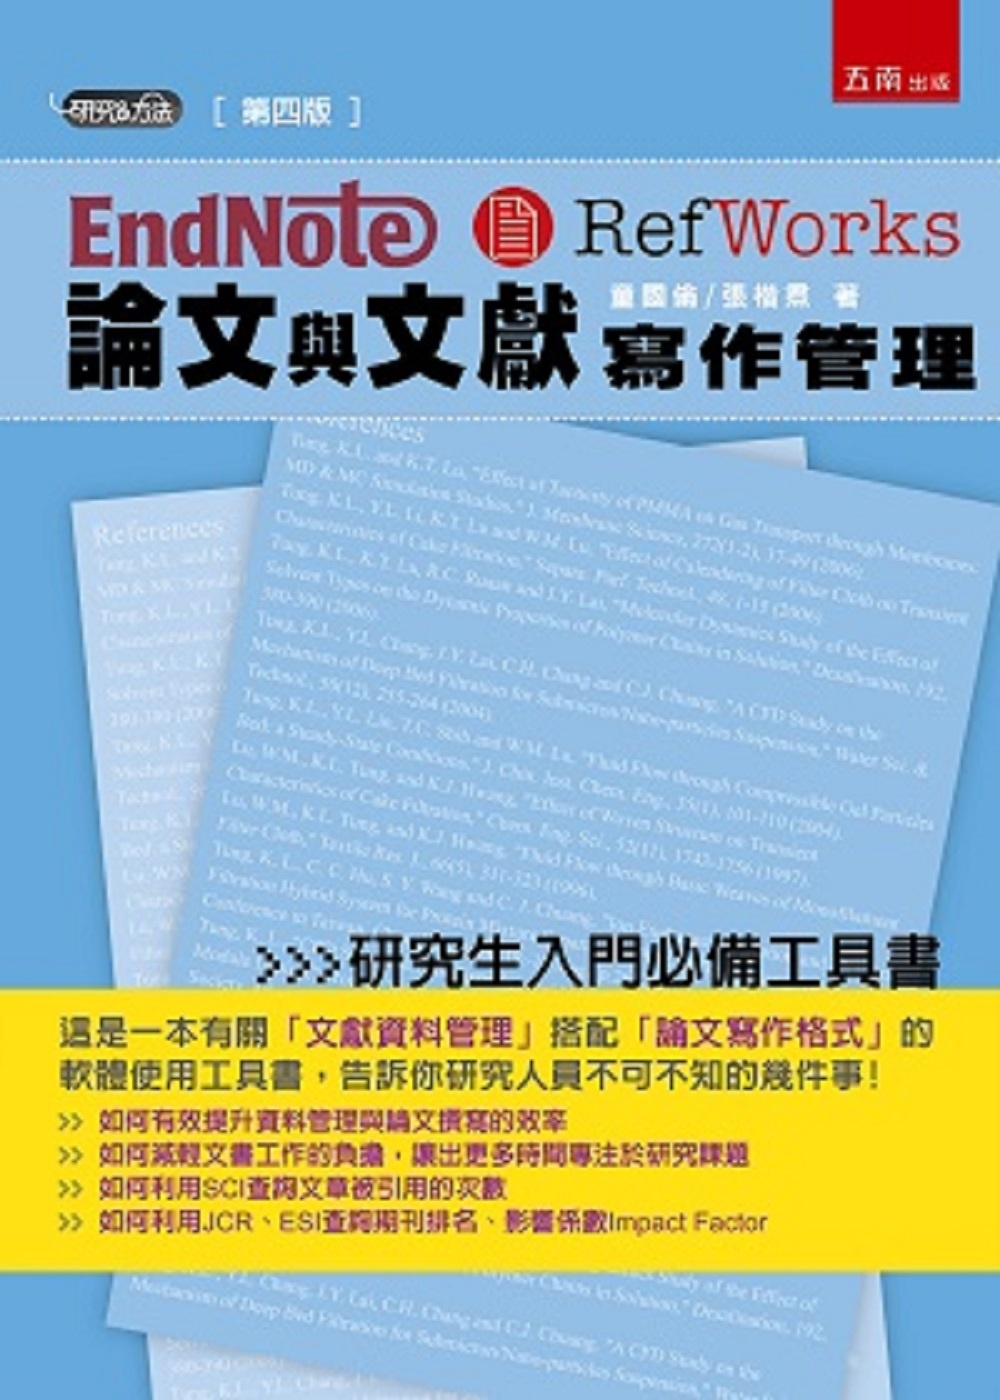 Endnote & Refworks 論文與文獻寫作管理（4版）